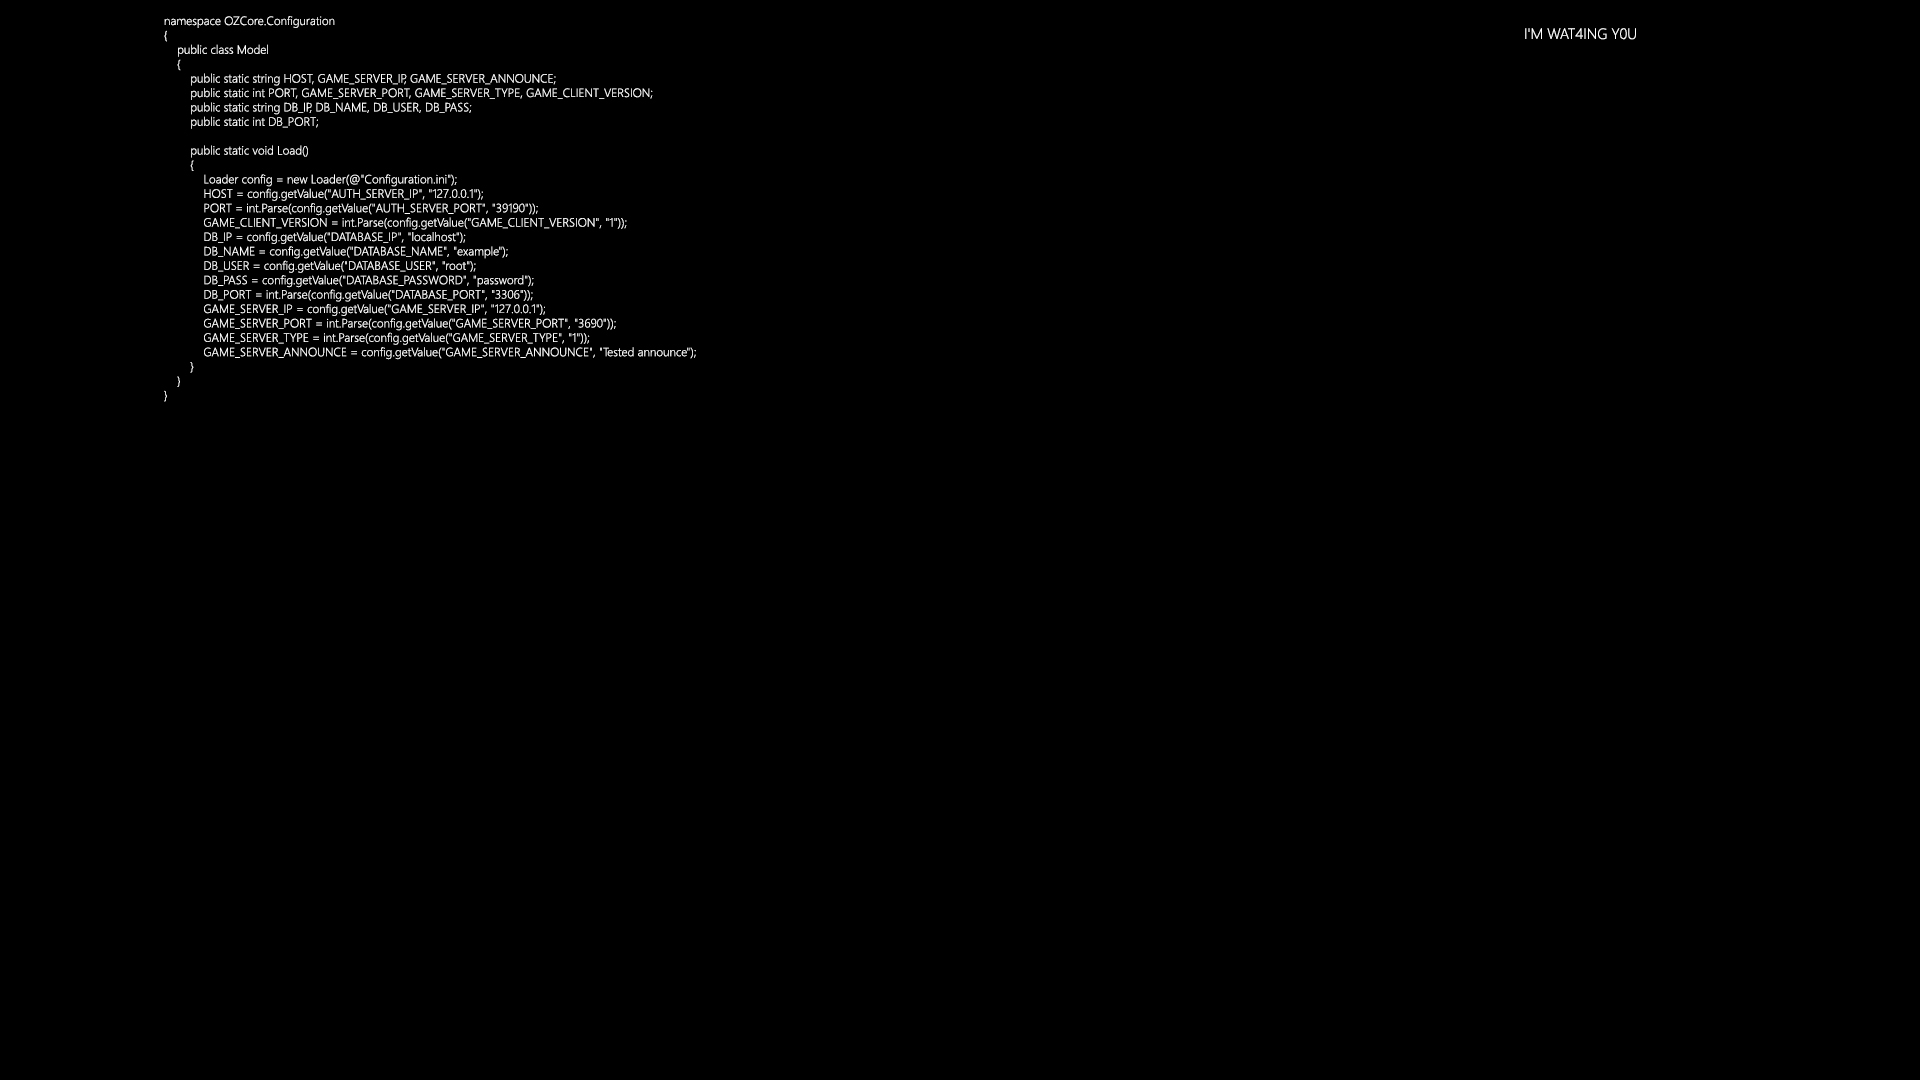 OZCore Monochrome Simple Background Black Background Text Code Video Games Minimalism 1920x1080